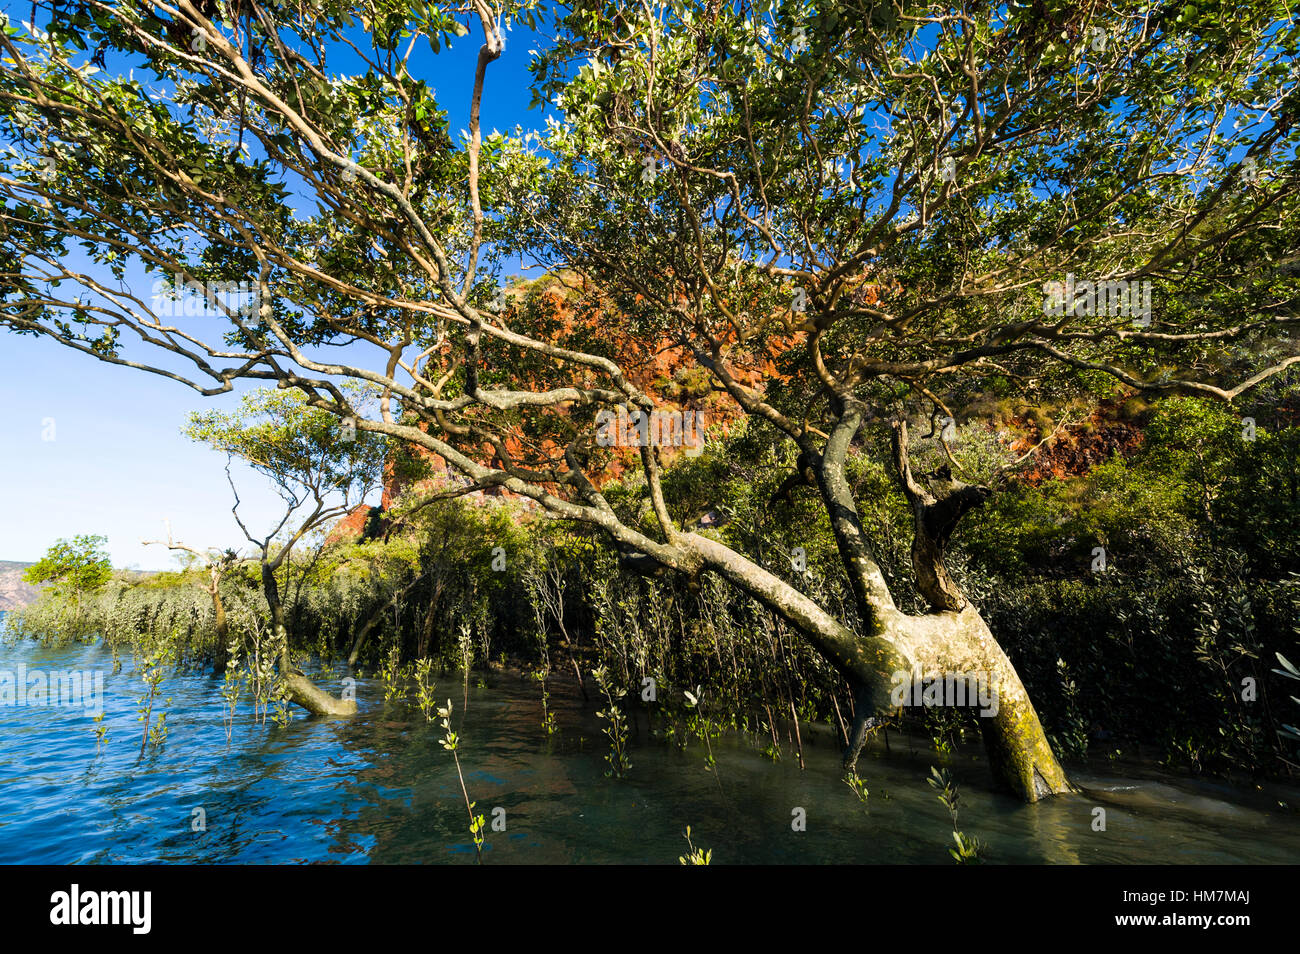 The sprawling canopy of a mangrove tree on a desert island. Stock Photo